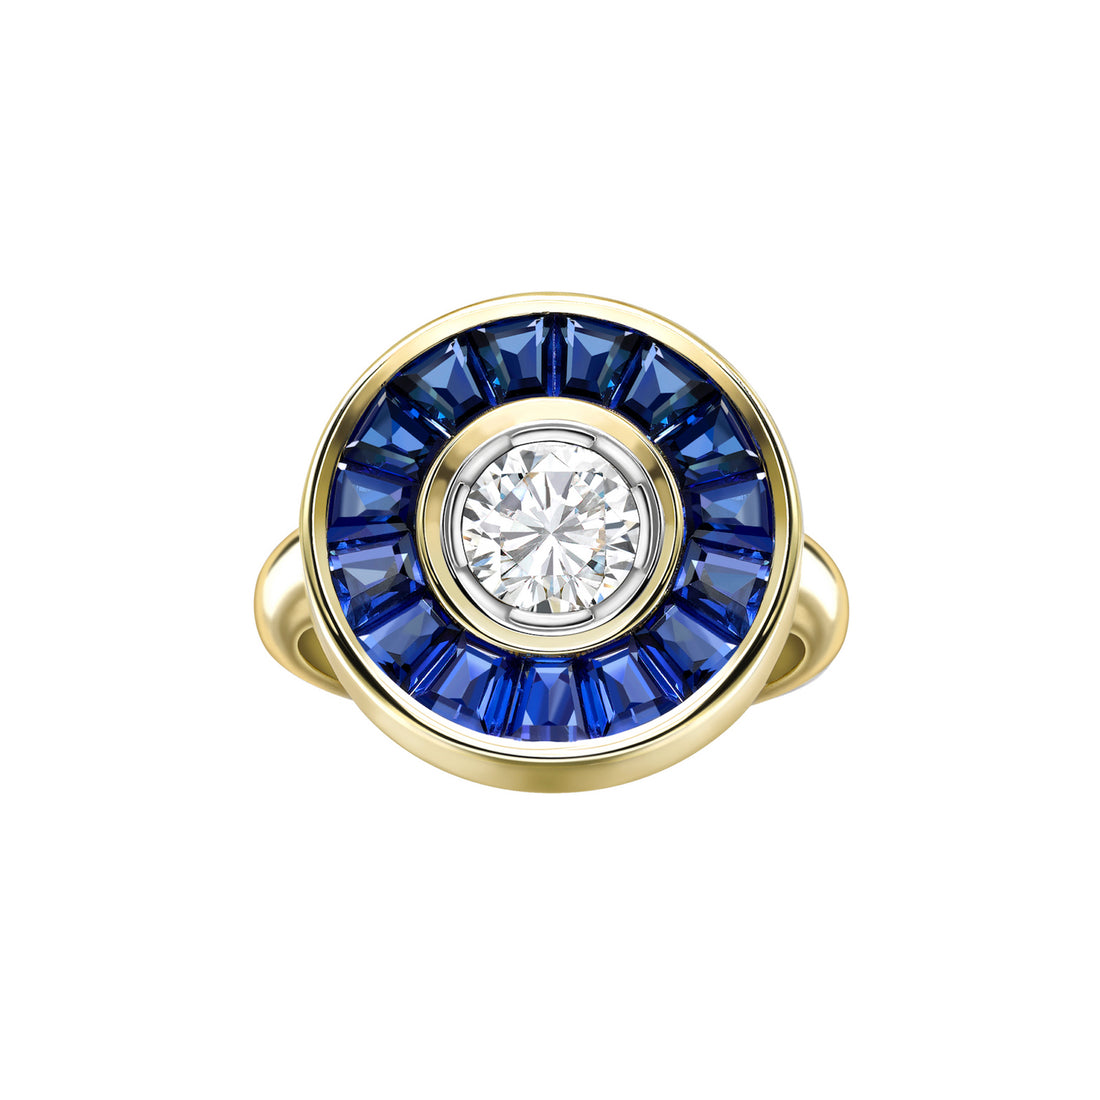  Sapphire & Diamond Halo Ring by Hattie Rickards | The Cut London